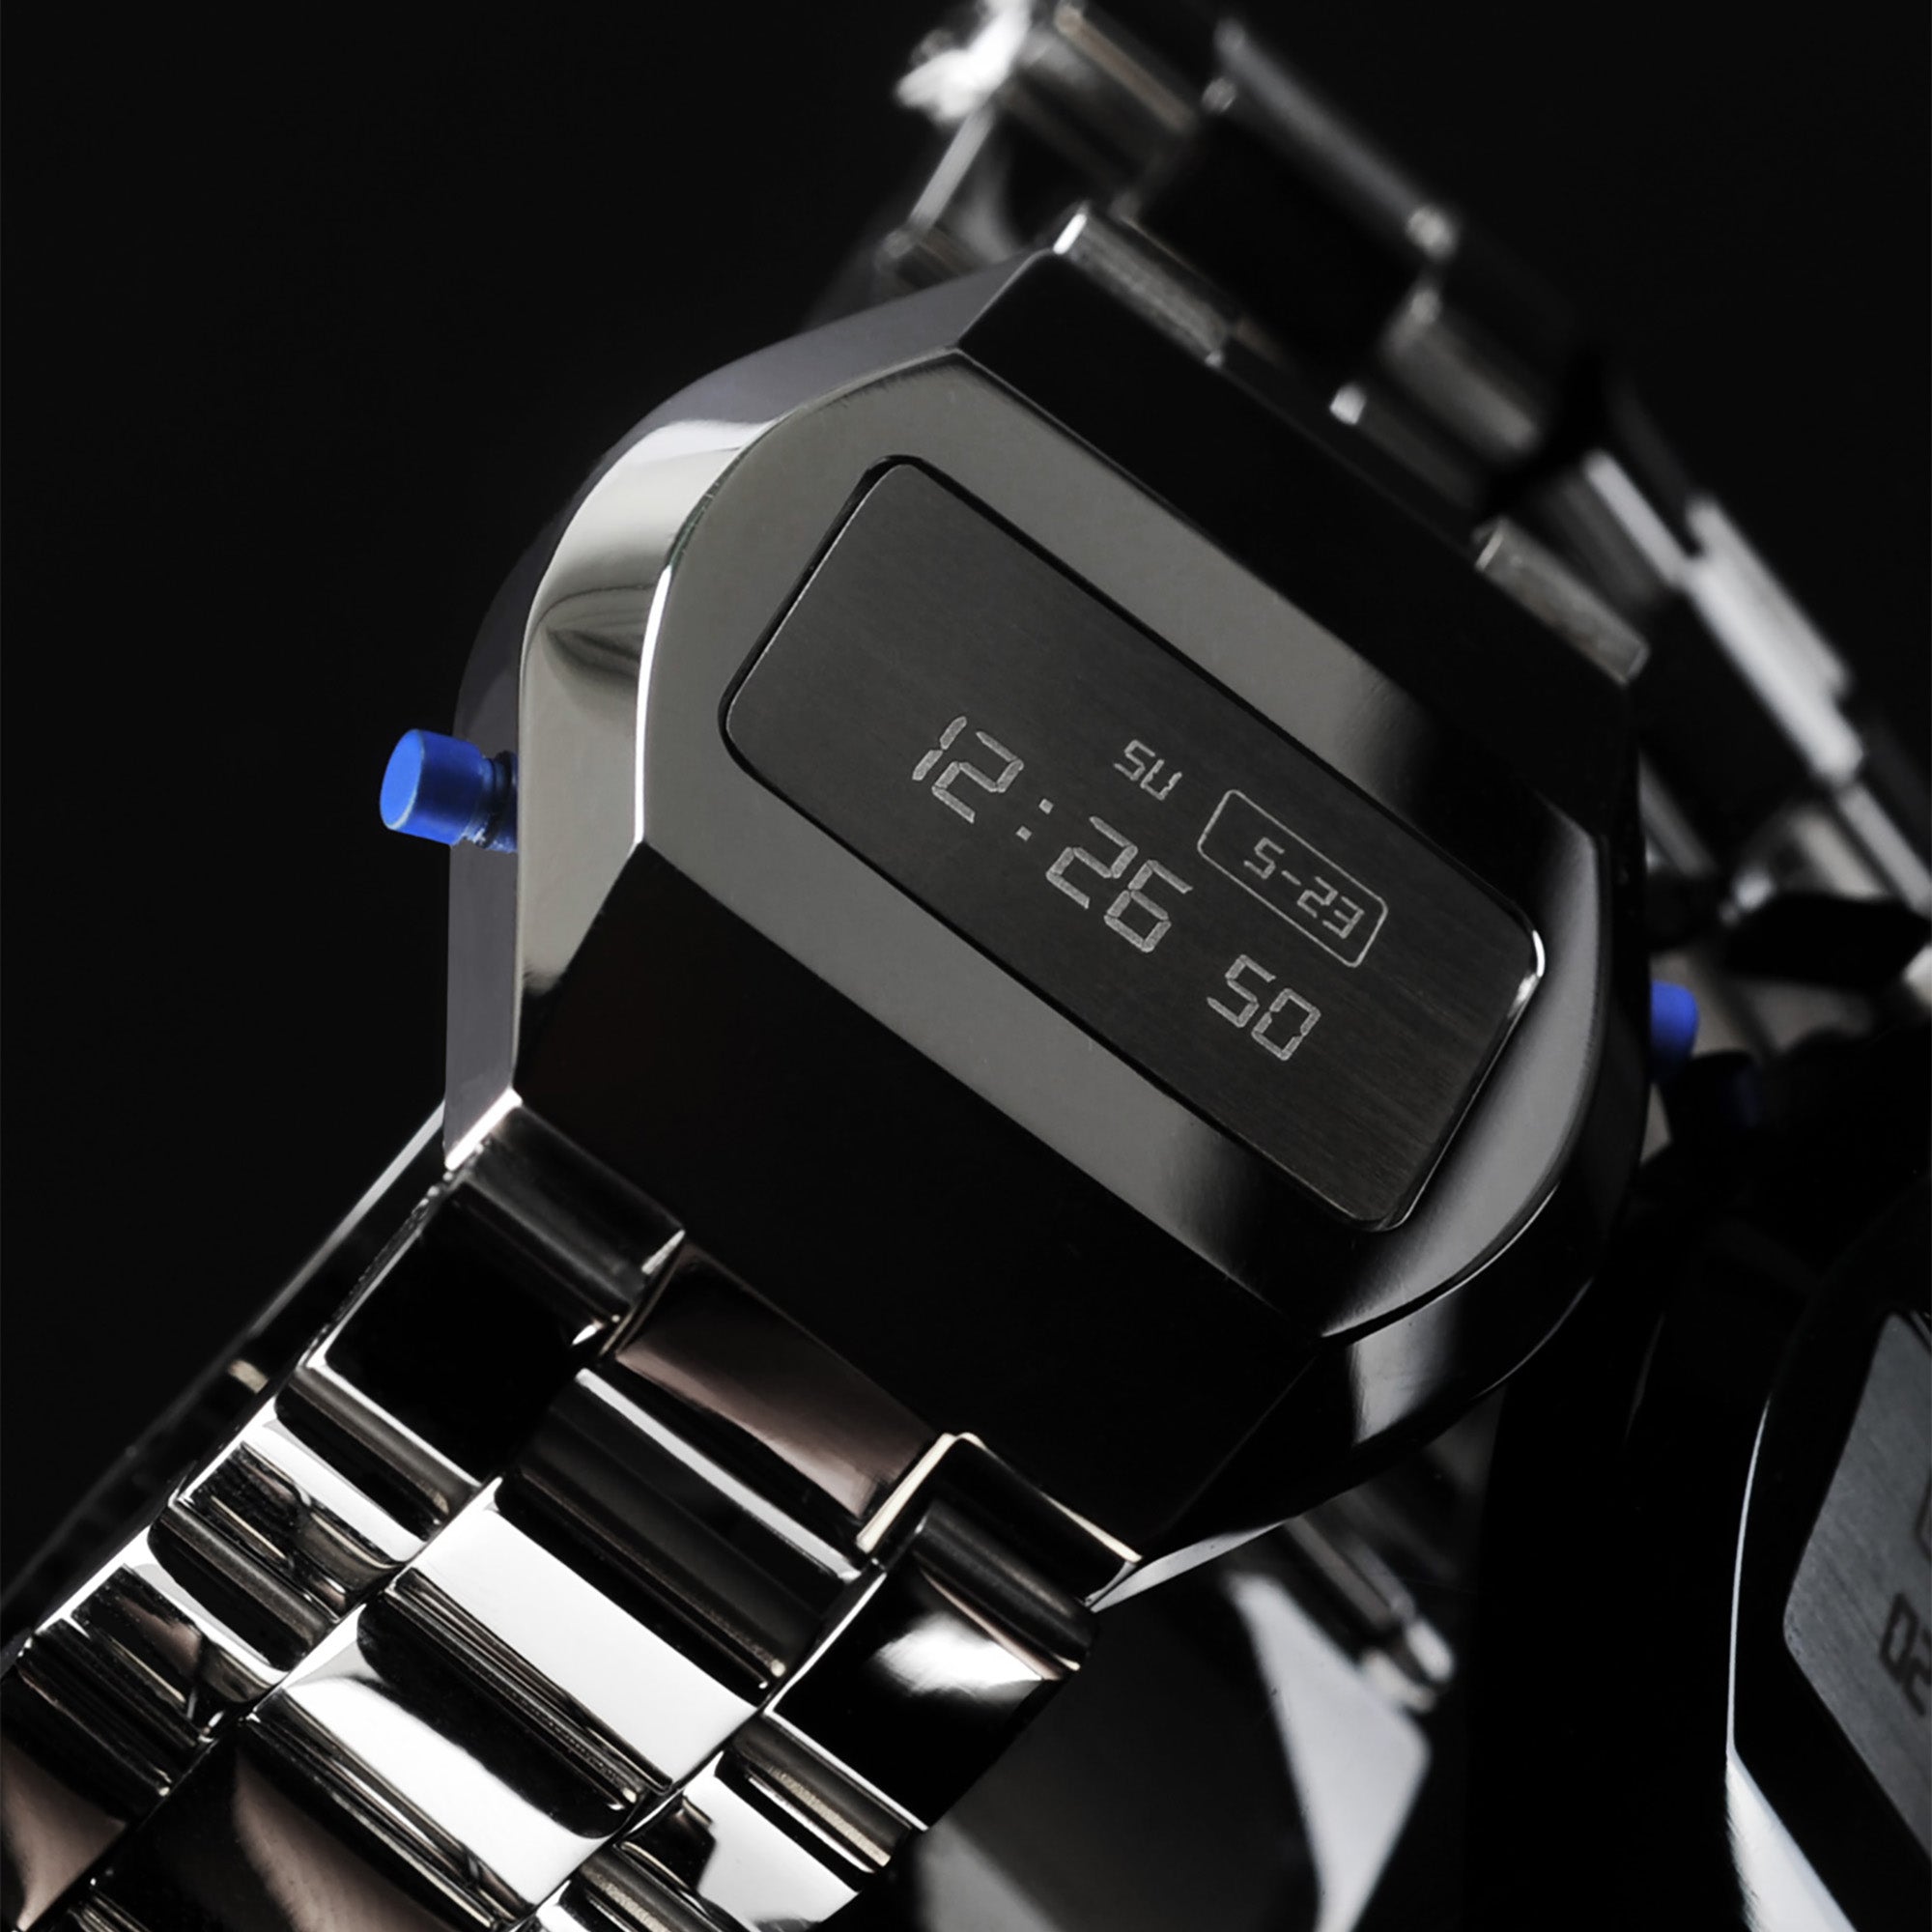 TIME:LESS:NESS - 1970 - The digital watch (Bracelet - Silver)